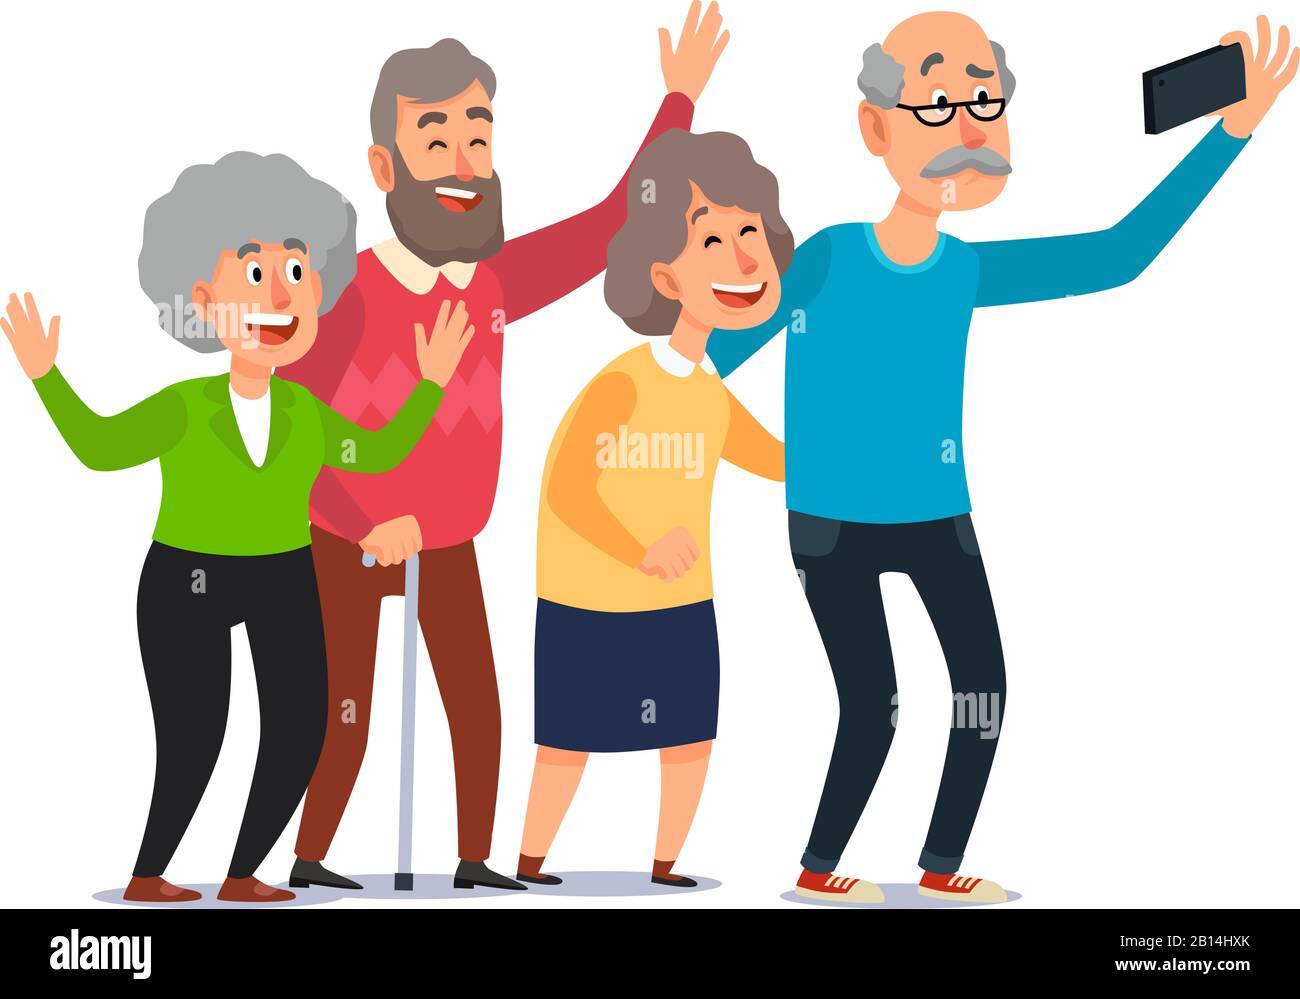 Old people selfie. Senior people taking smartphone photo, happy laughing group of seniors cartoon illustration Stock Vector